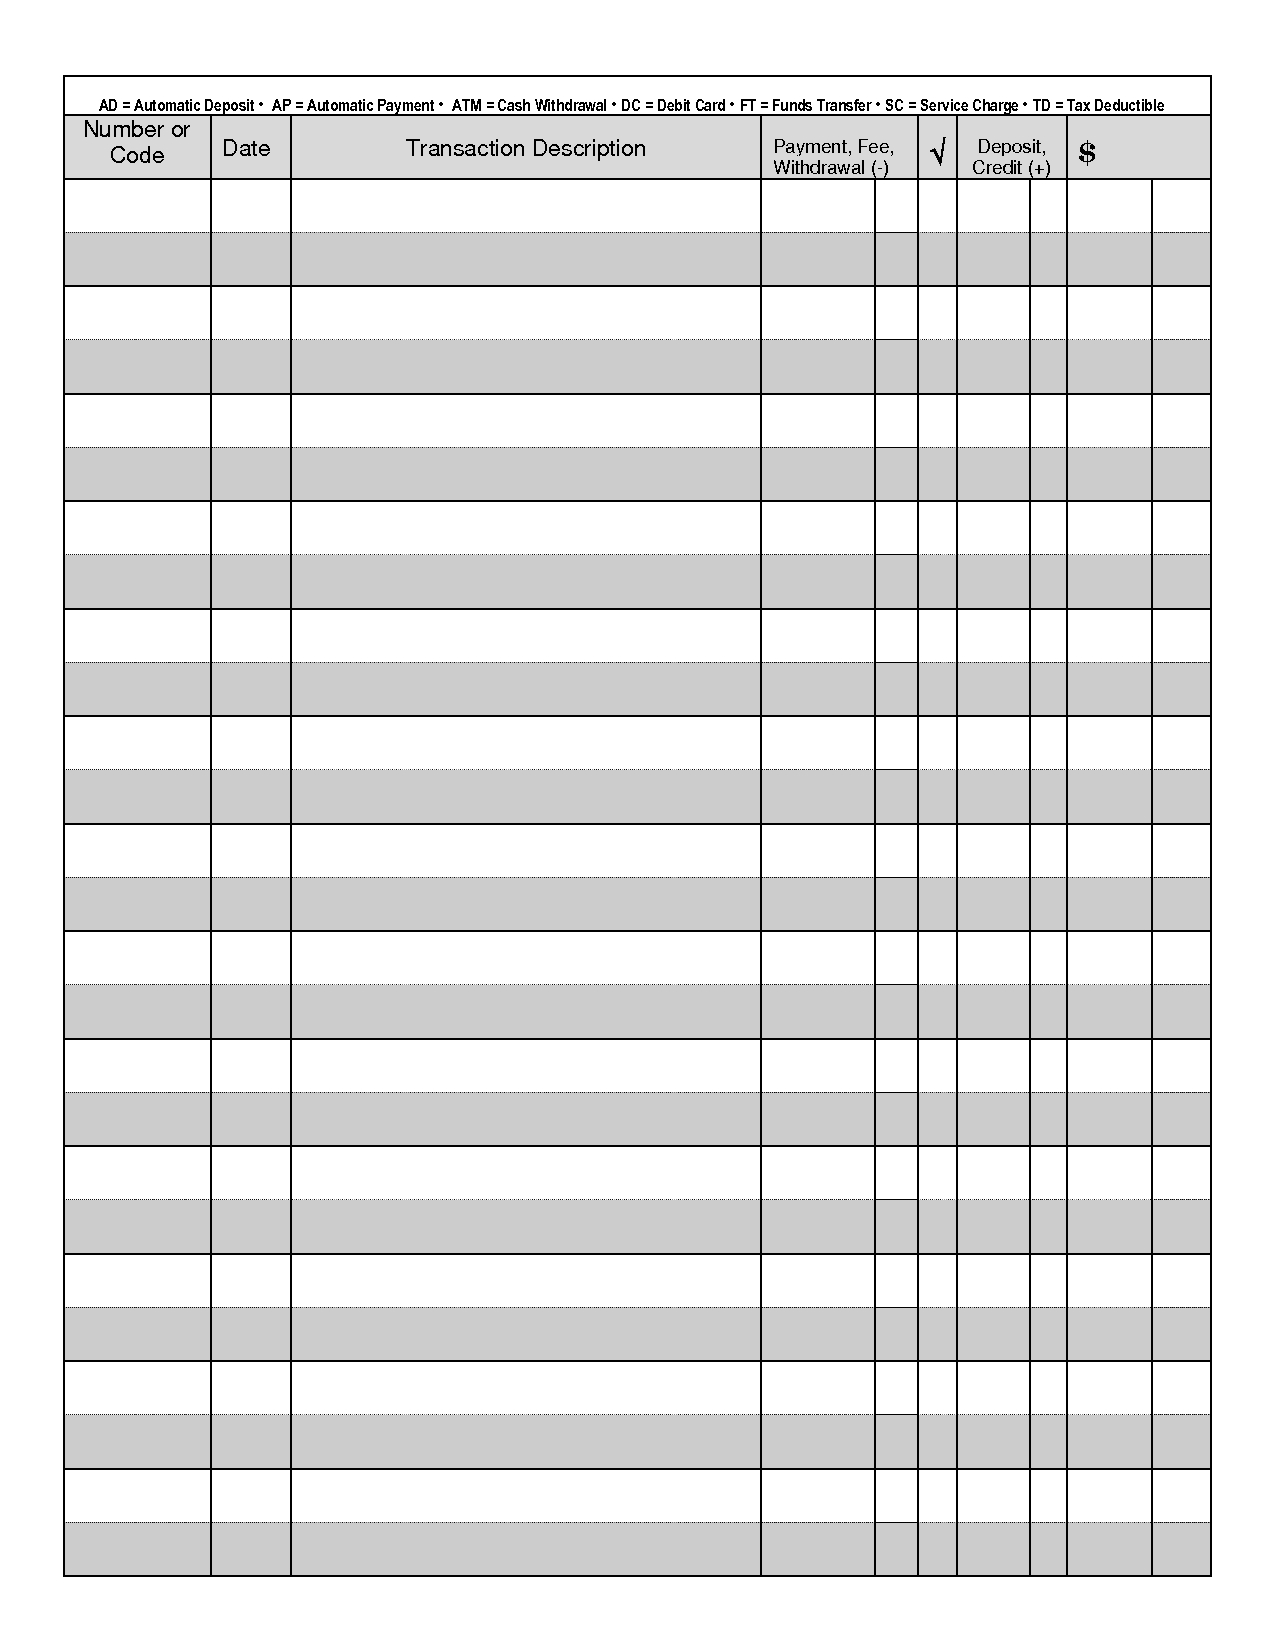 Free Printable Blank Check Register Template Free Printable